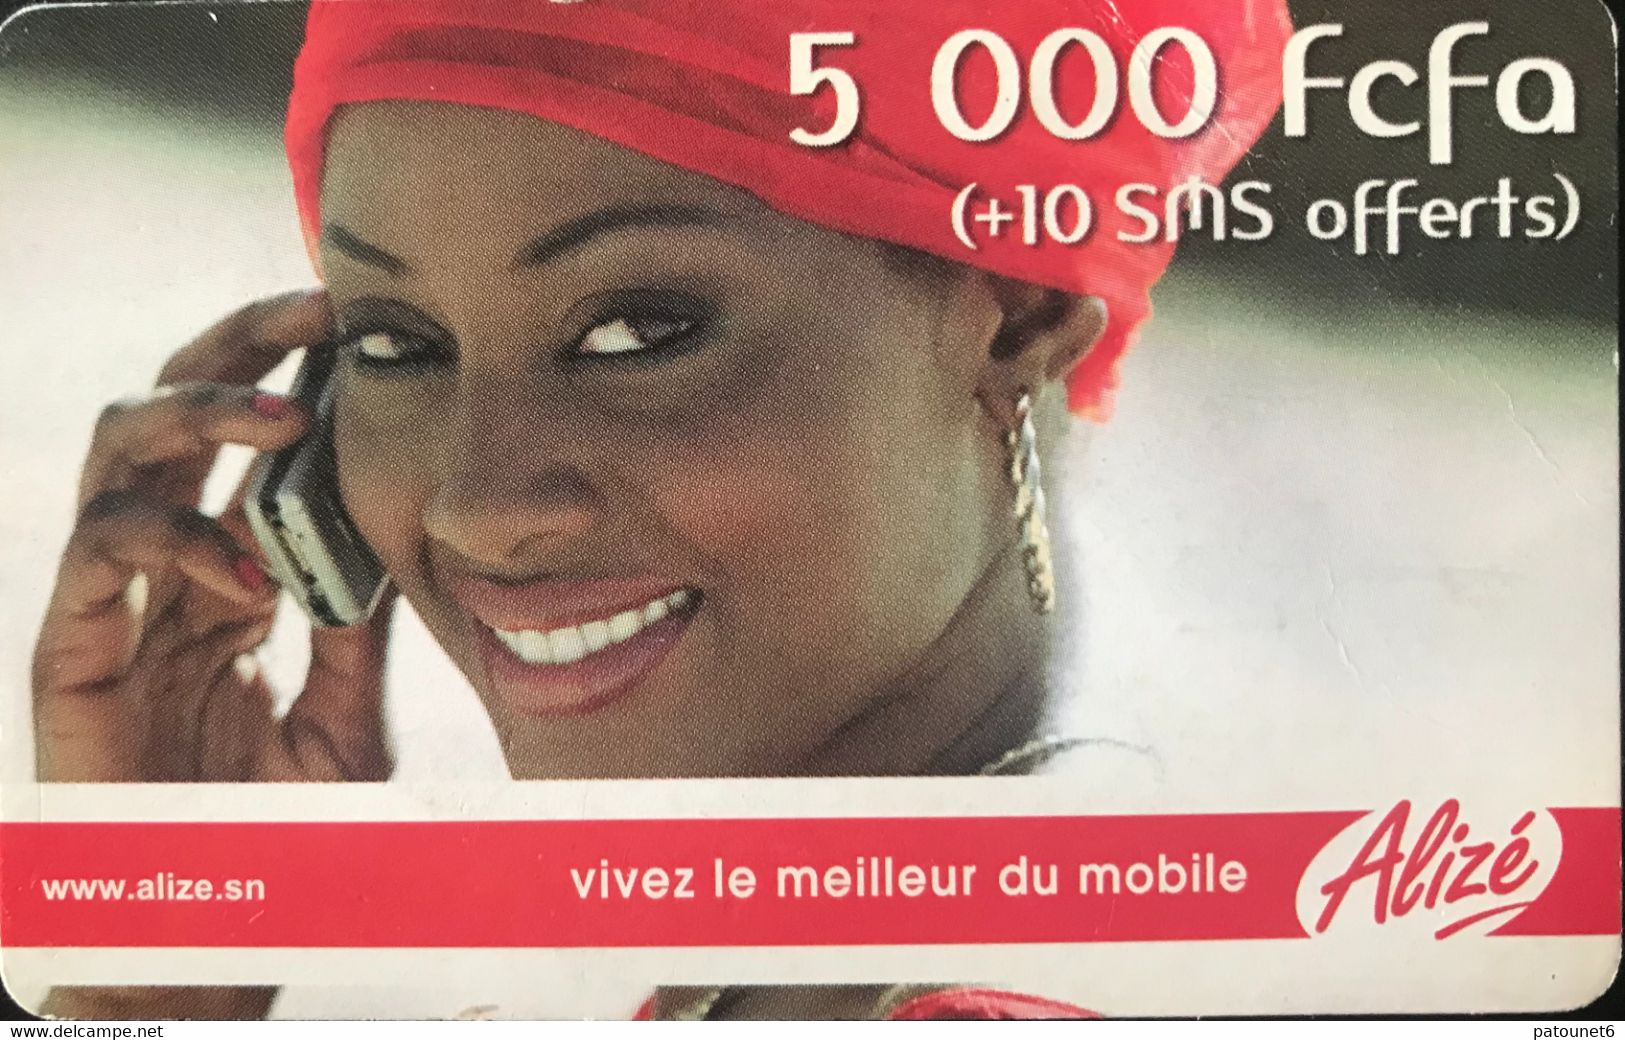 SENEGAL  -  Rechage  -  Diamono  -  Alizé  -  5.000 FCFA + 10 SMS - Sénégal